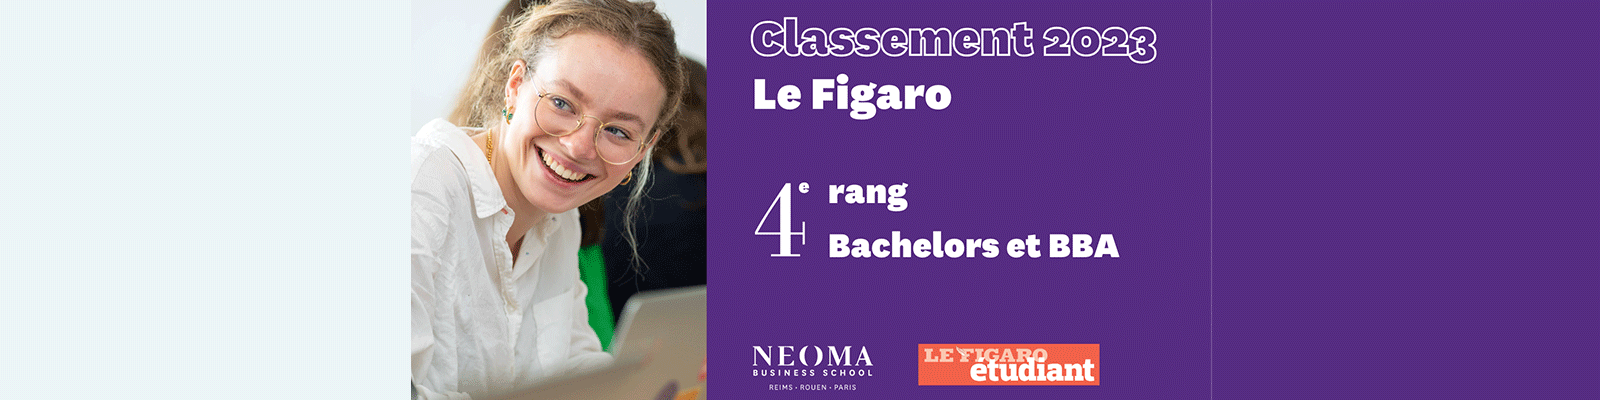 Classement Bachelors et BBA du Figaro 2023 : NEOMA 4e